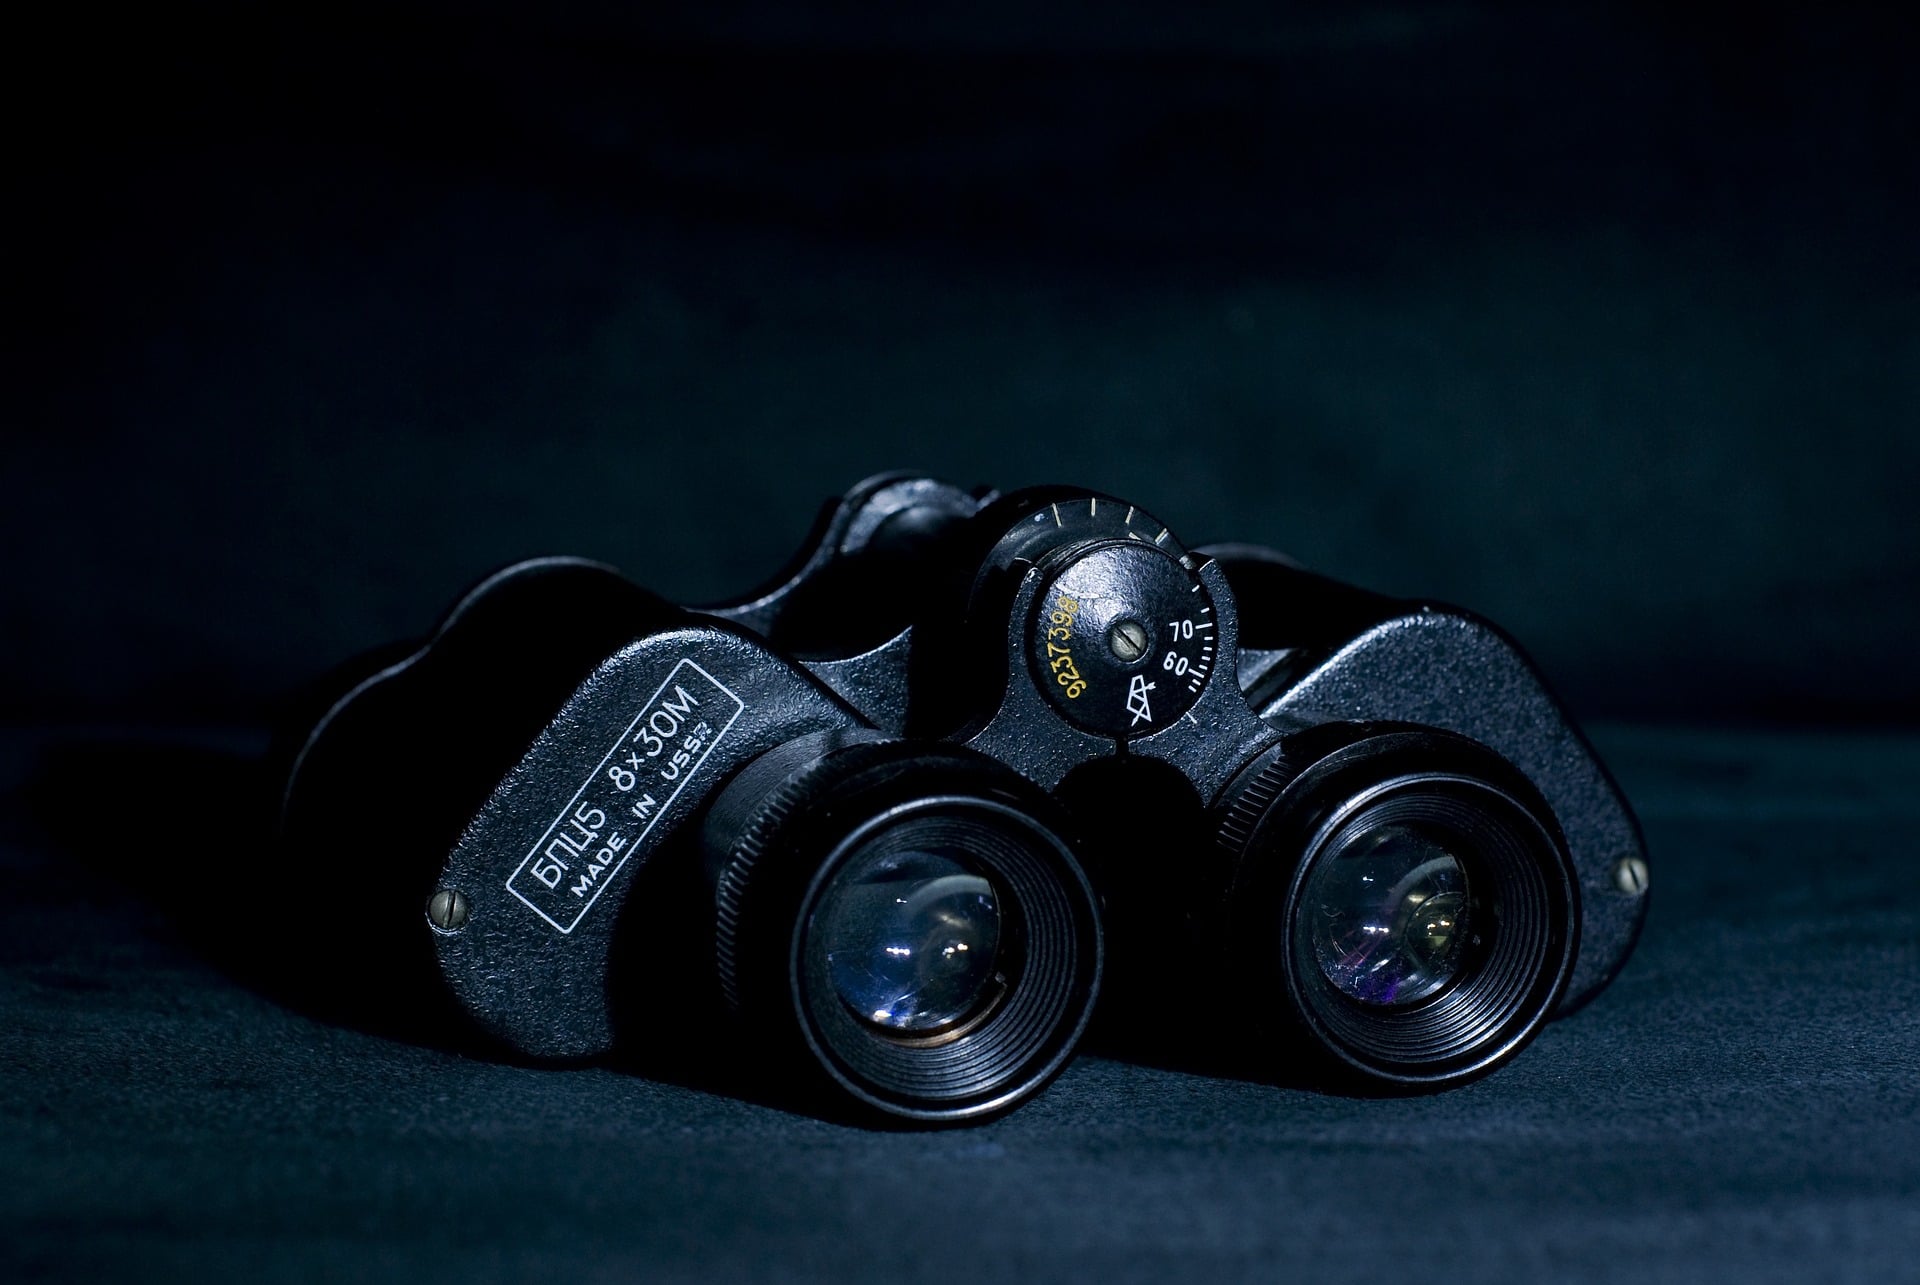 Black binoculars placed on a black surface